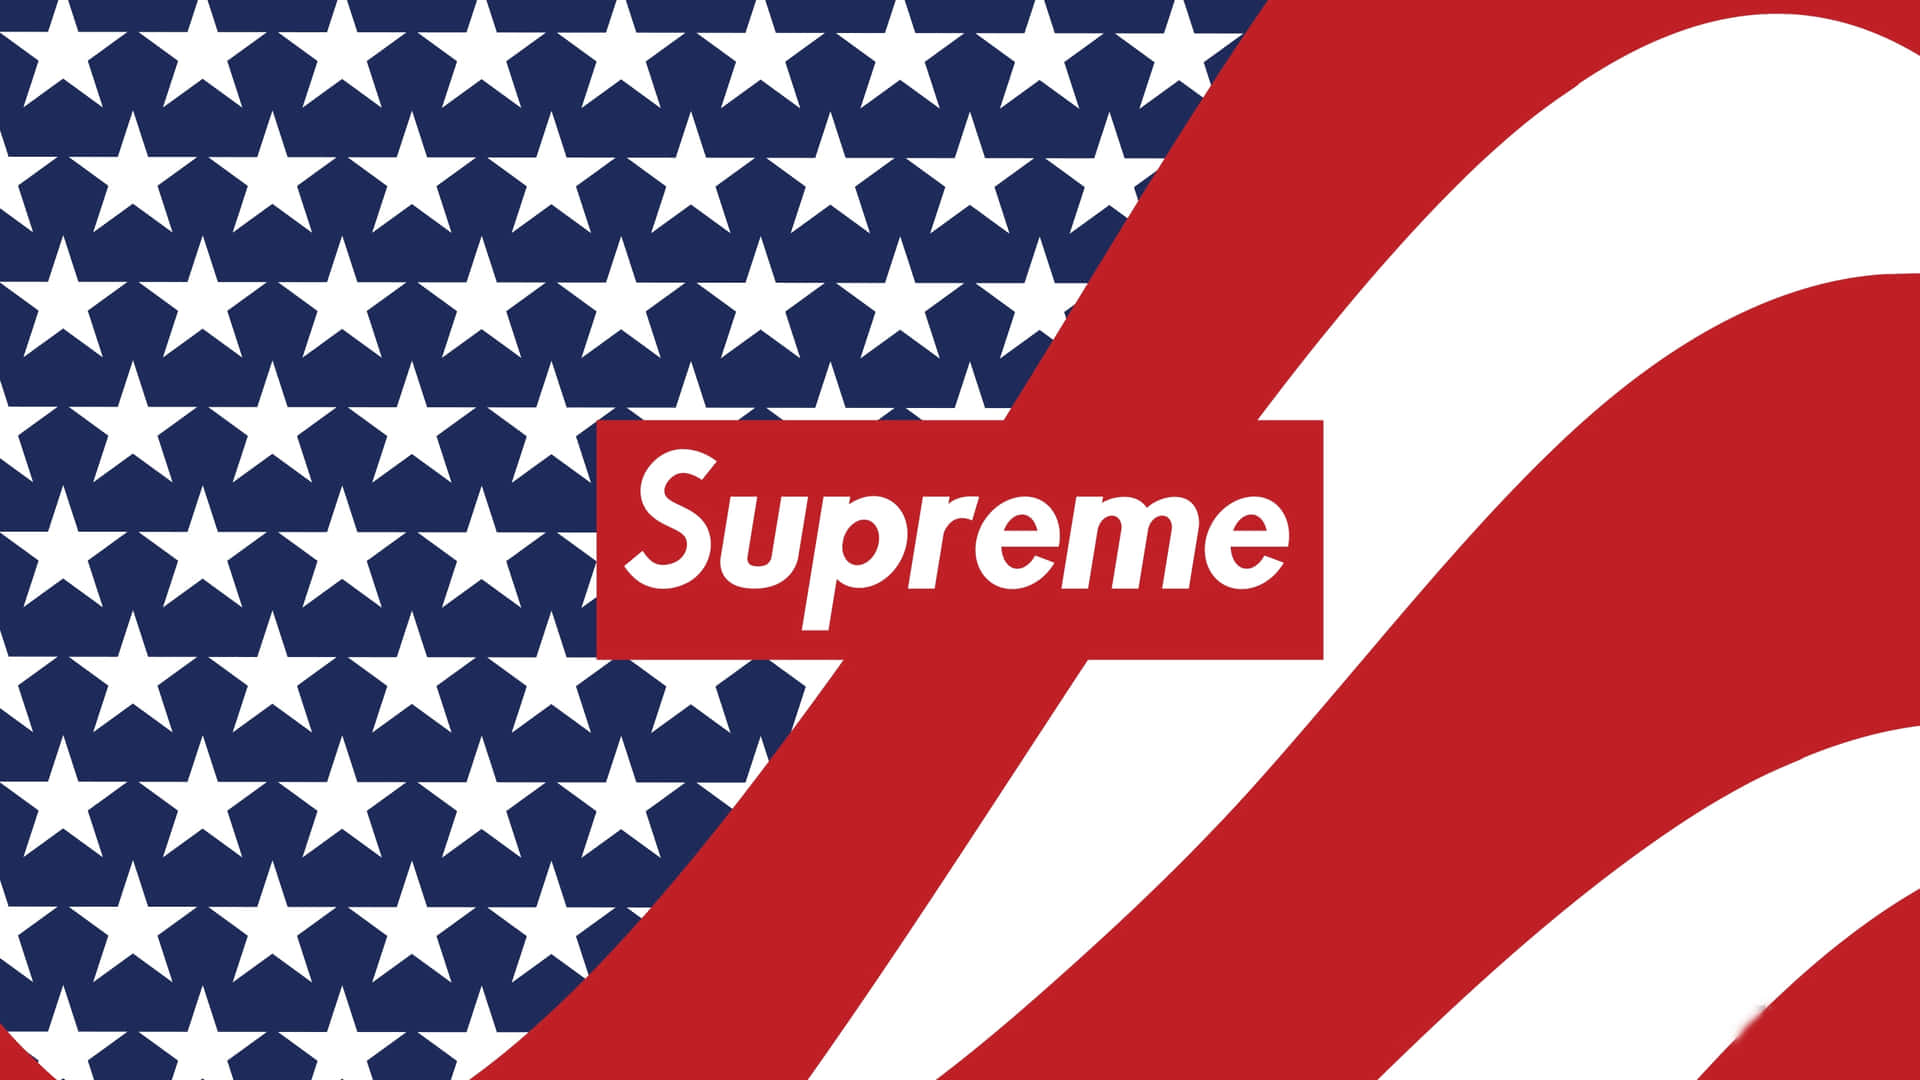 Supreme's iconic box logo